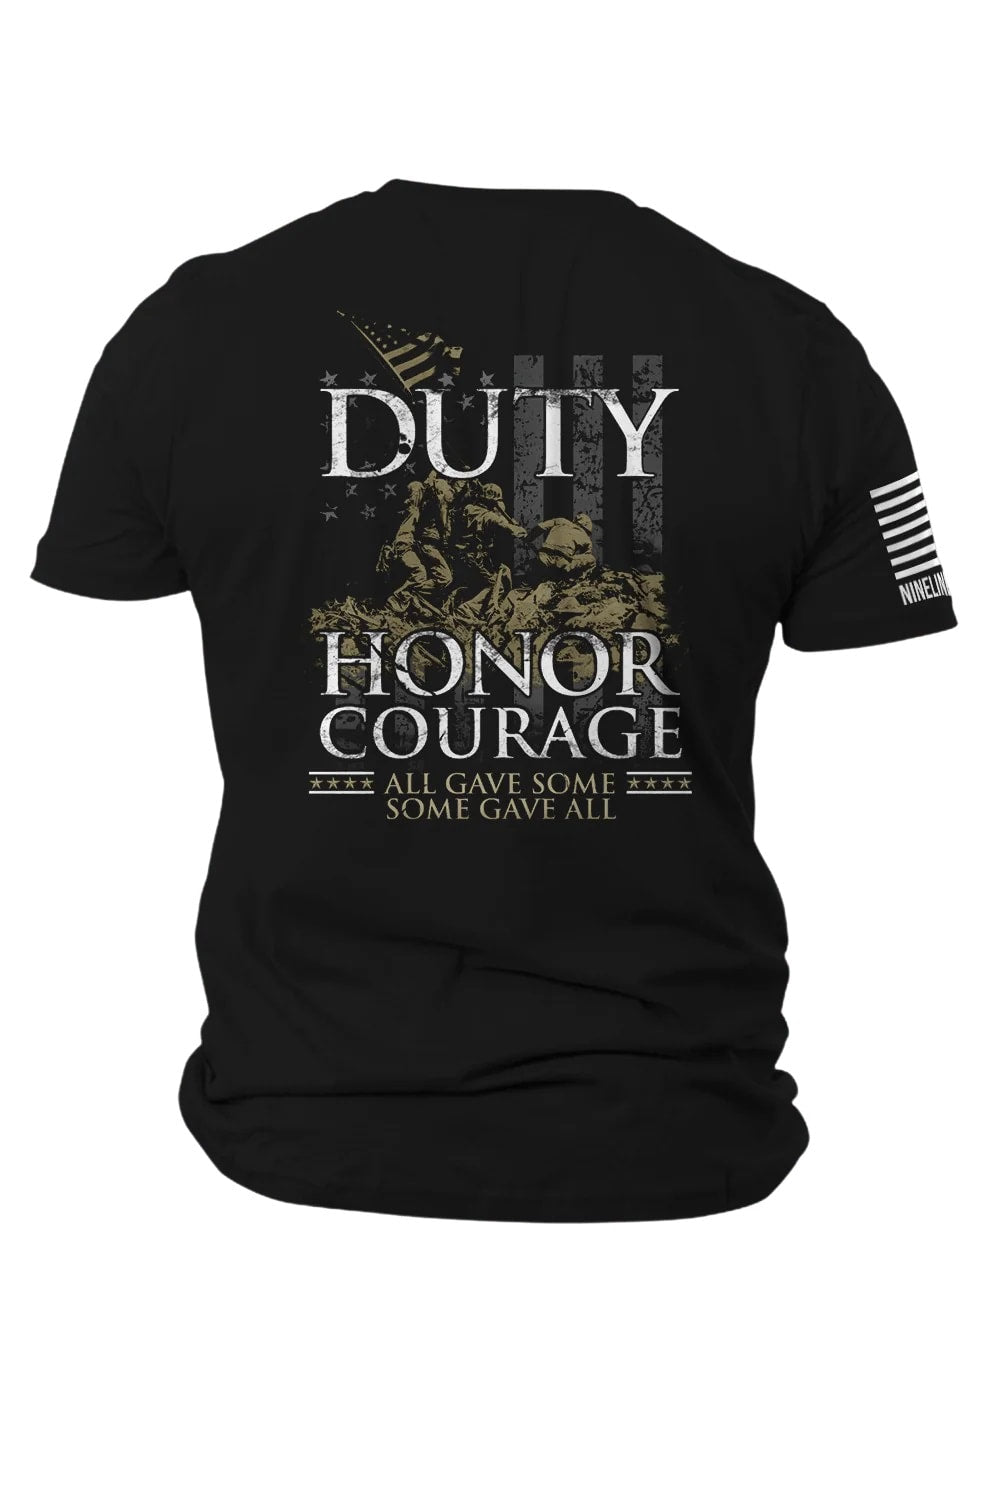 Nine Line Men’s T-Shirt - Duty Honor Courage